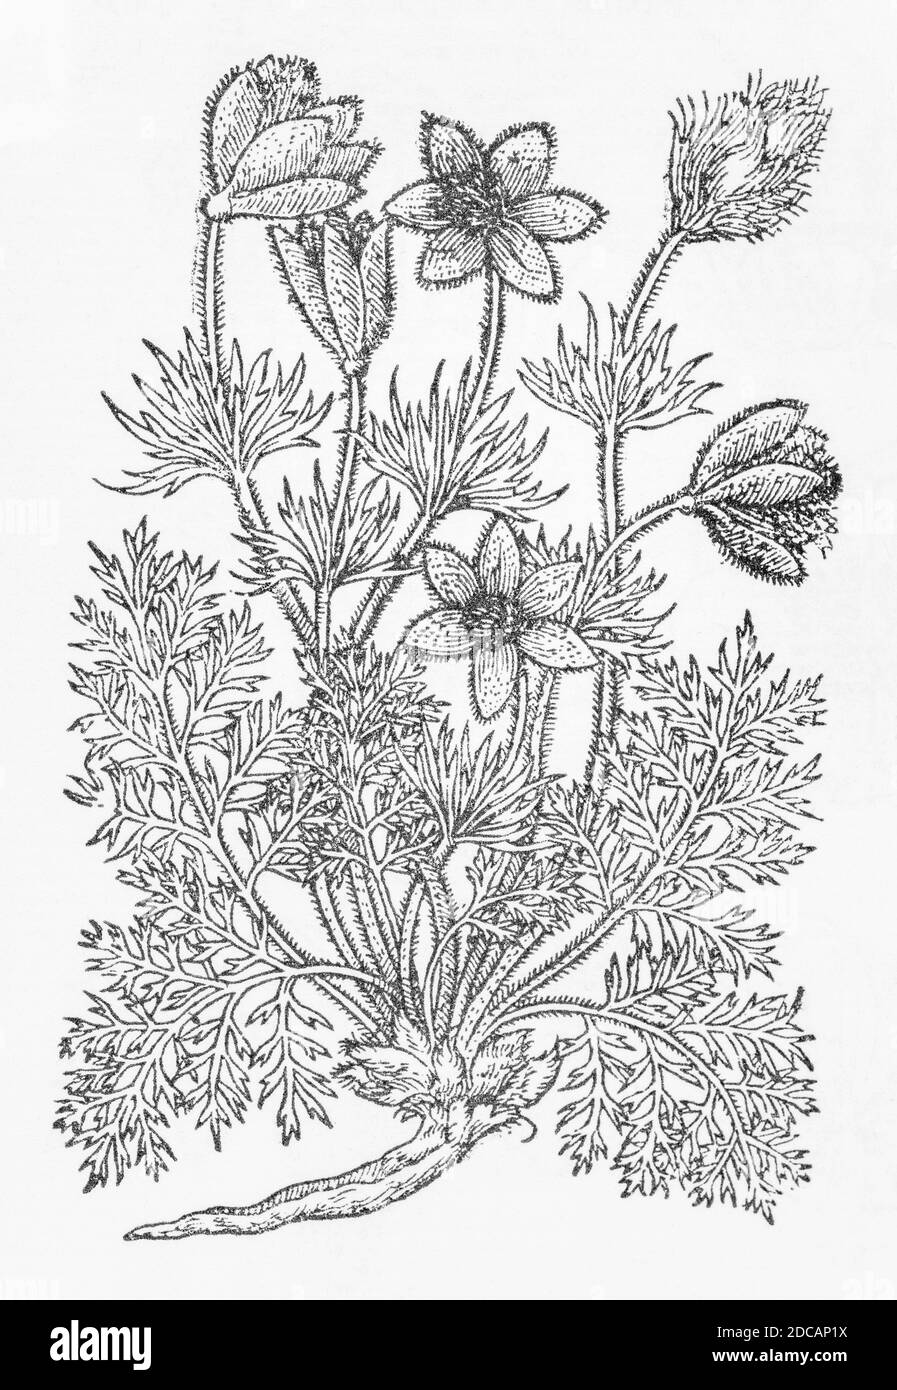 Pasque-Flower / Pulsatilla vulgaris plant woodcut from Gerarde's Herball, History of Plants. Gerard refers to it as 'Pulsatilla vulgaris'. P308 Stock Photo